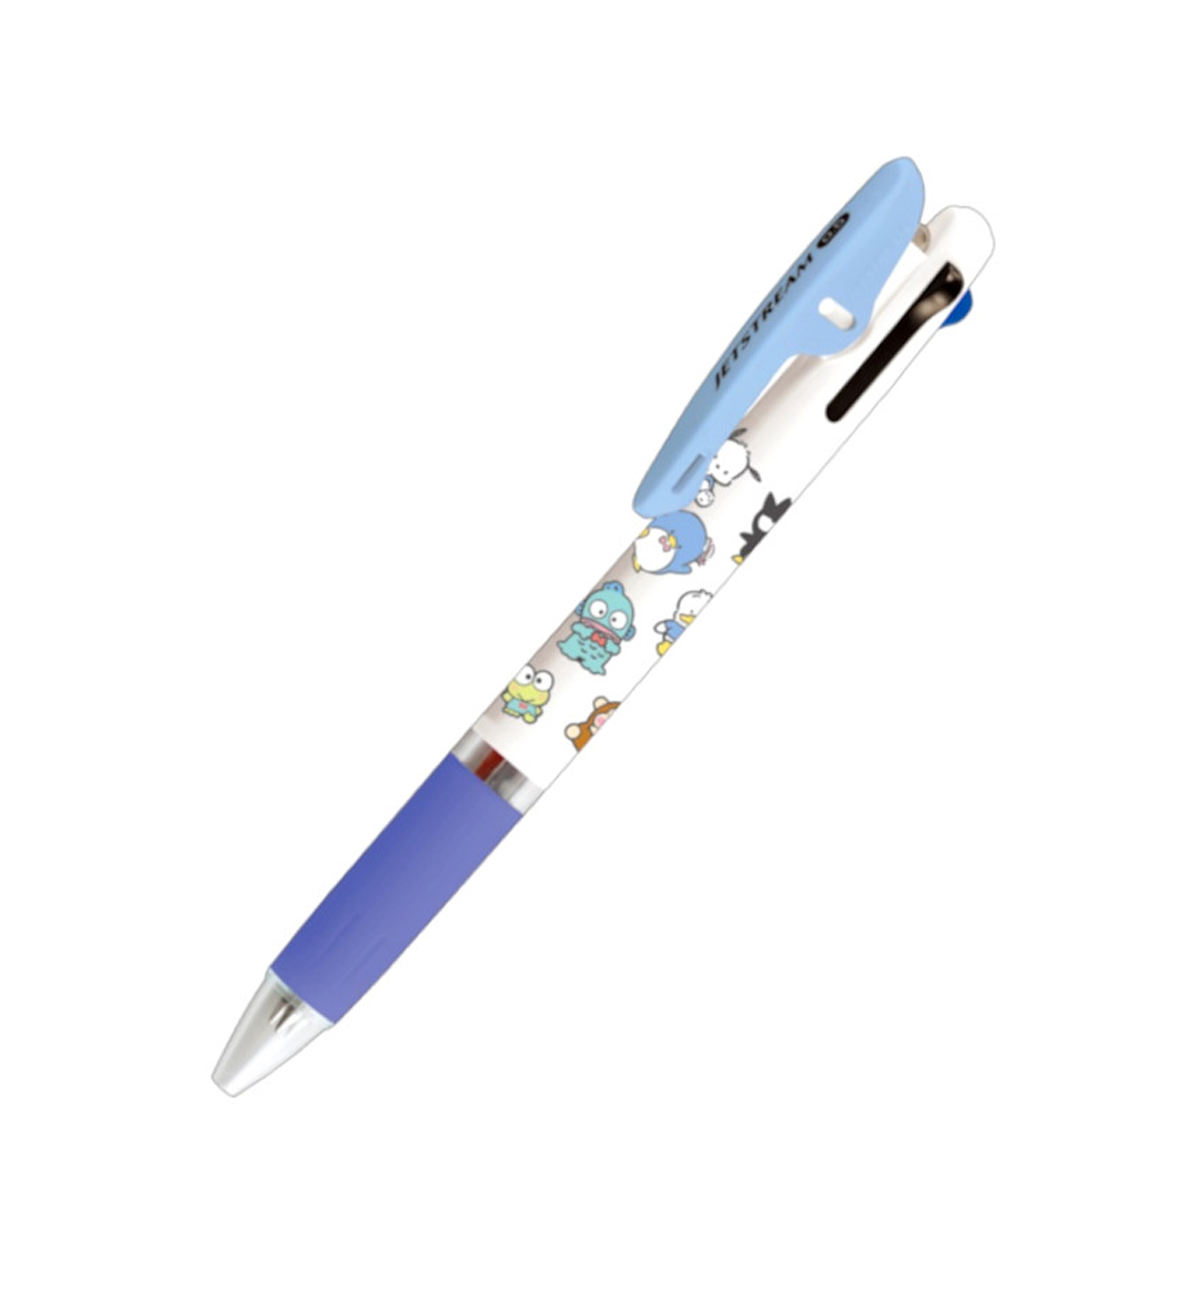 Sanrio Jetstream 0.5mm Pen [Characters]